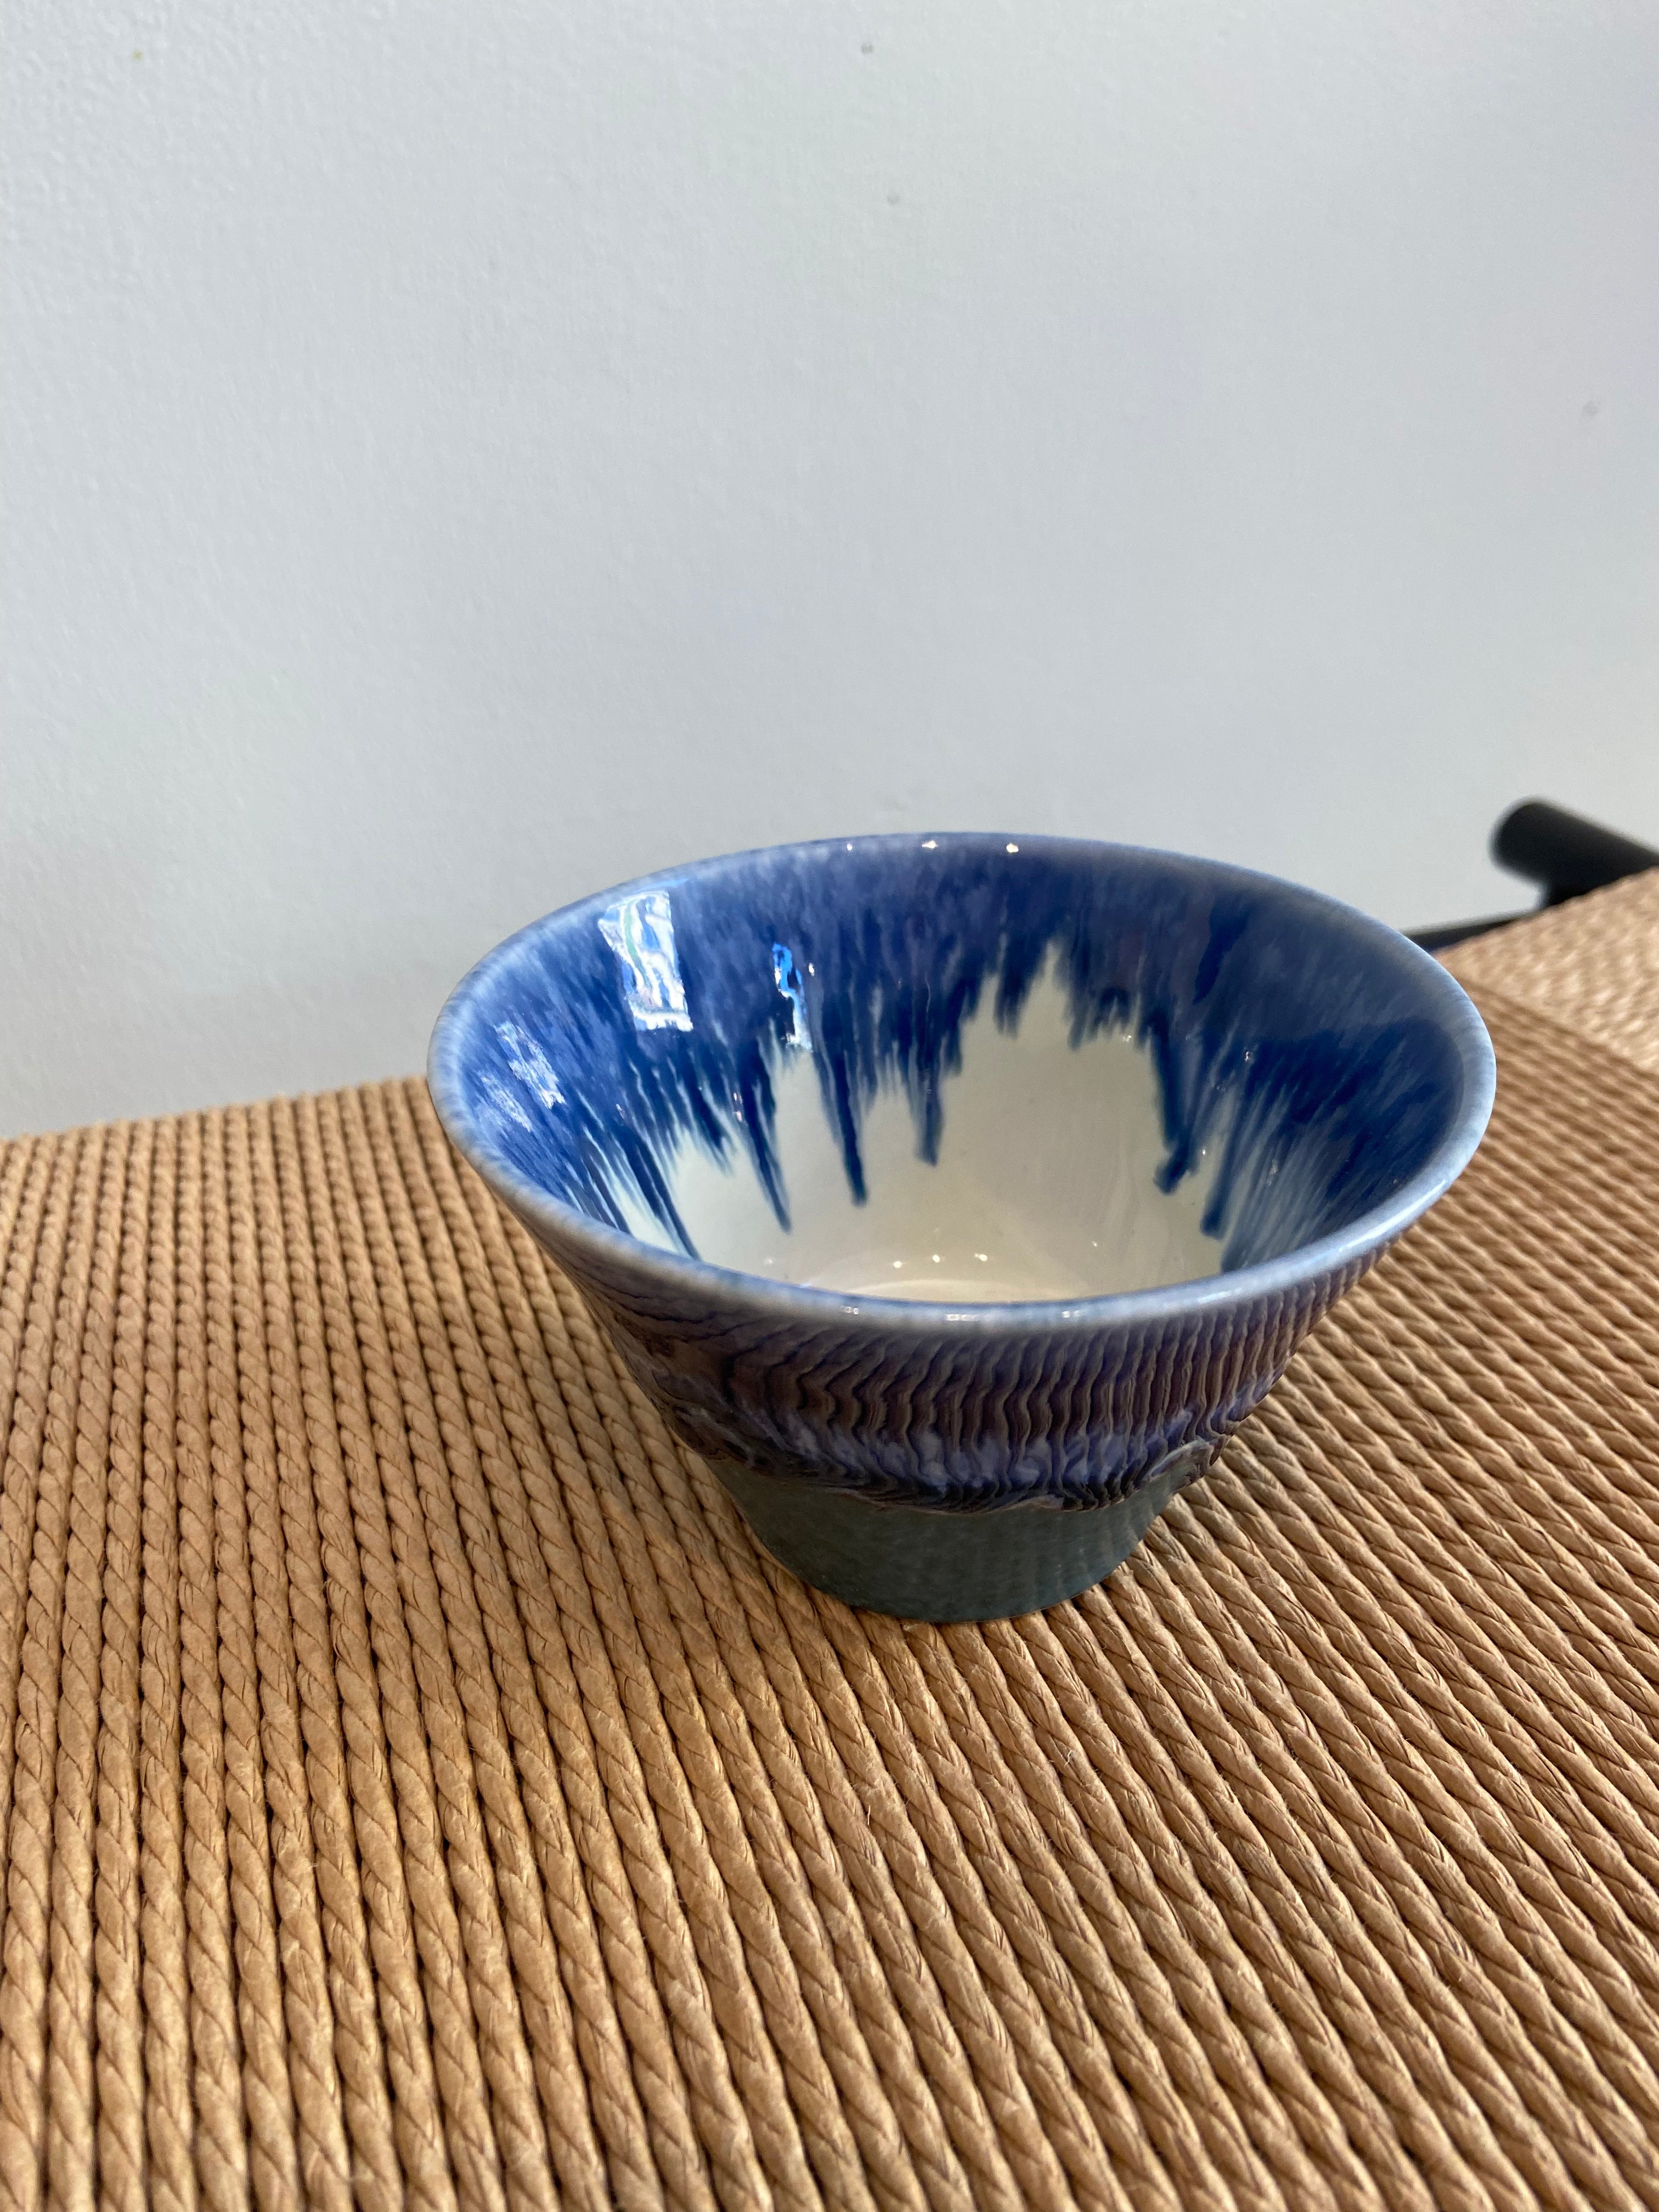 Handmade bowl with dark blue glaze